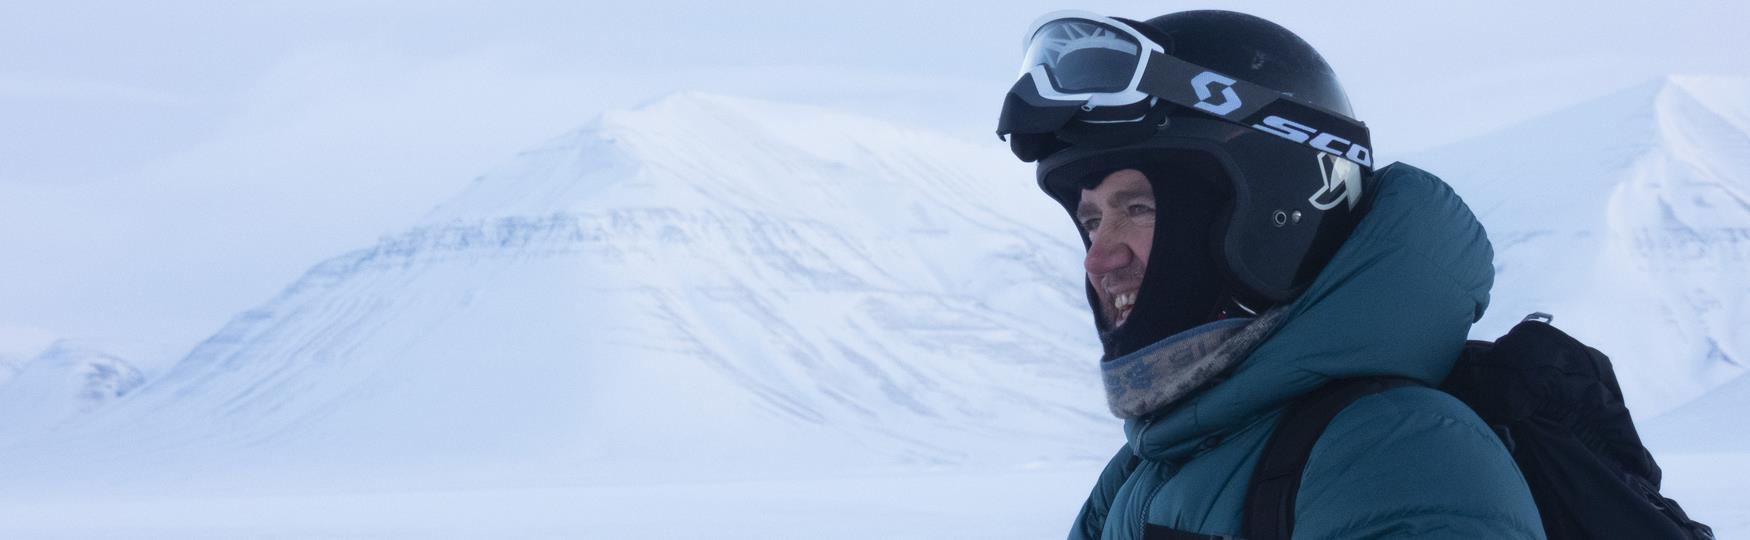 Ronny Brunvoll in snowmobile gear